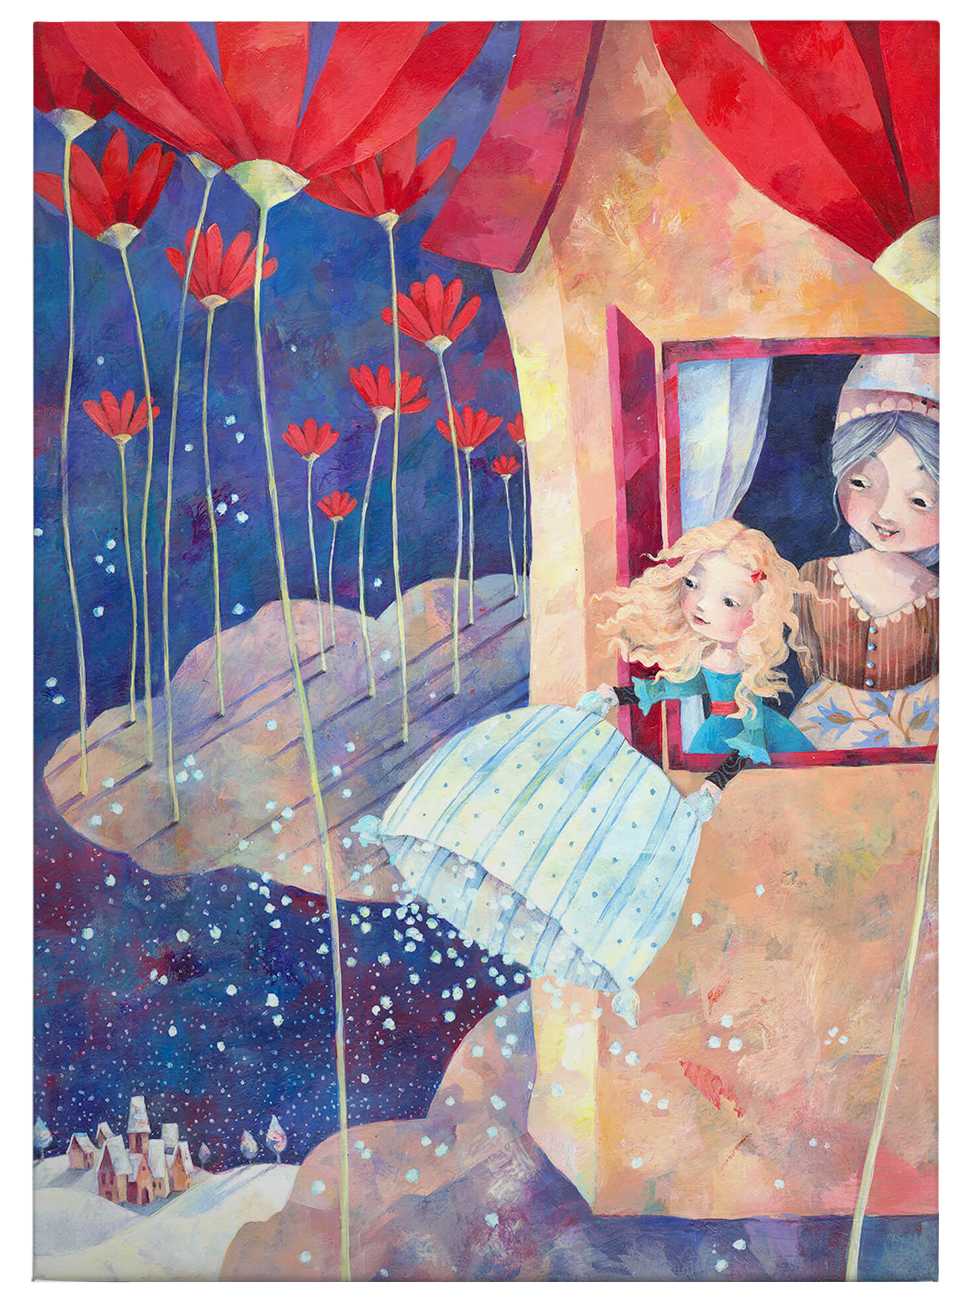             Canvas print fairy tale mocher Hulda, by Blanz
        